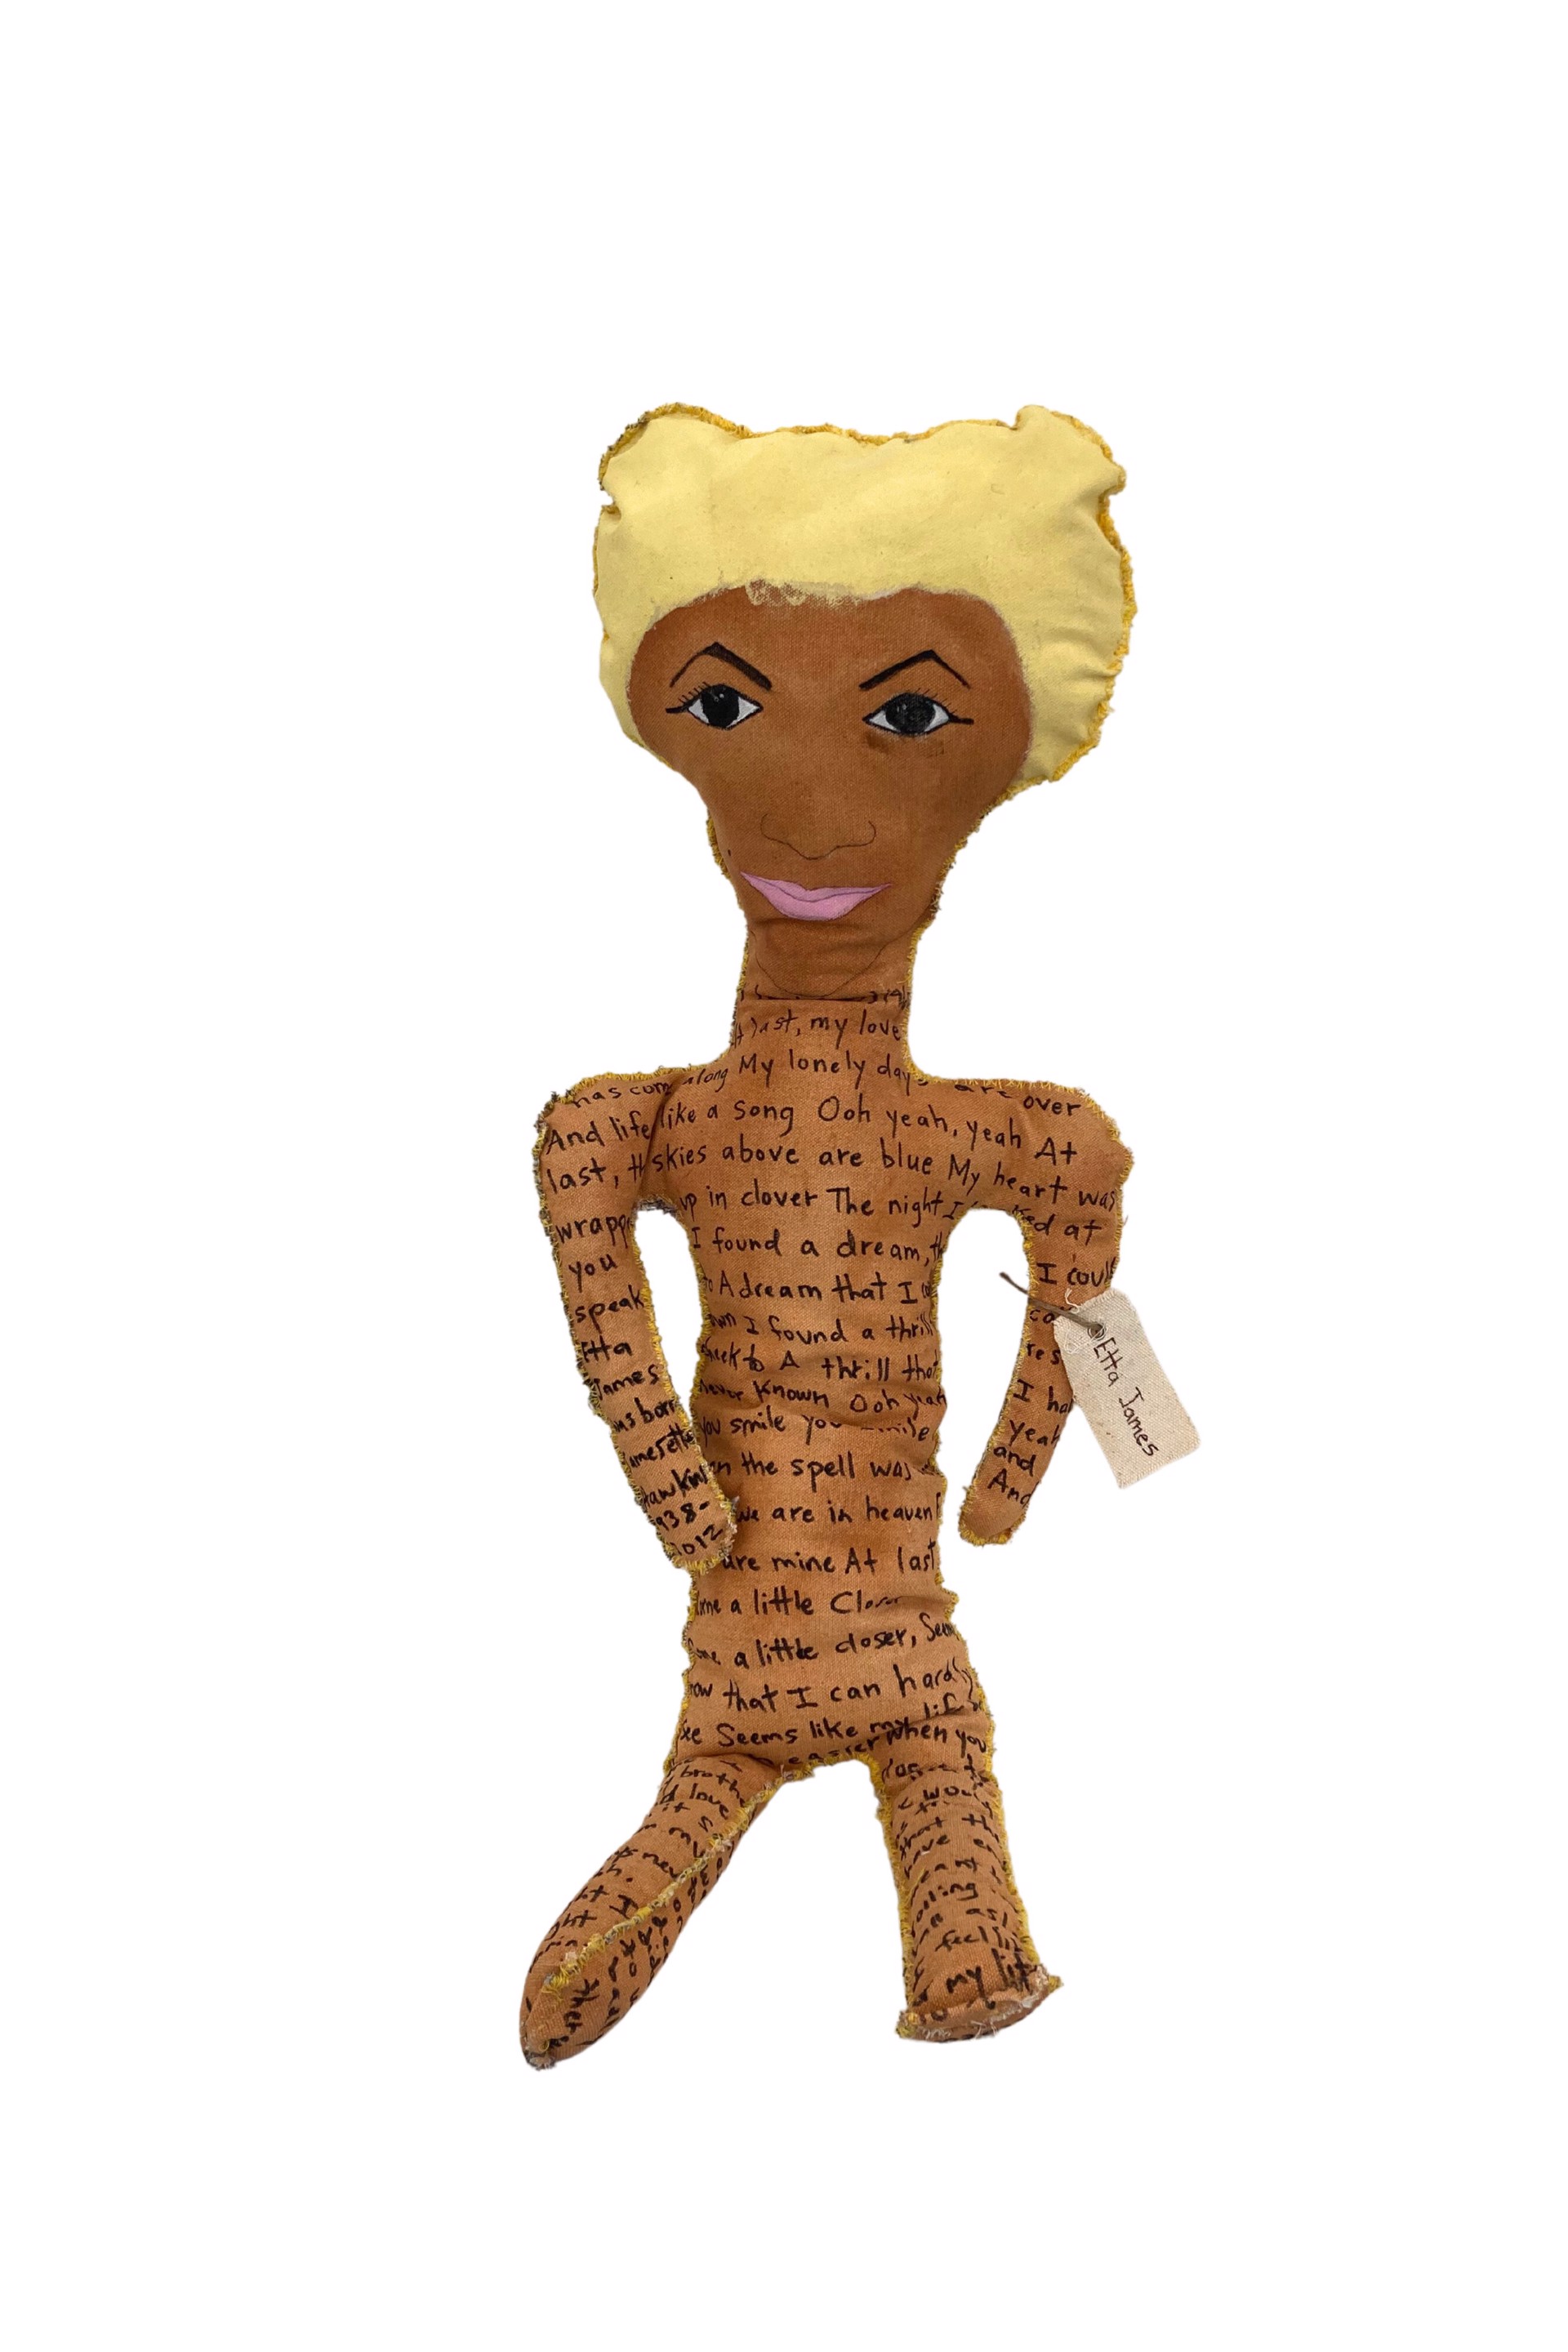 Etta James (Asylum Doll) by Susan Spangenberg